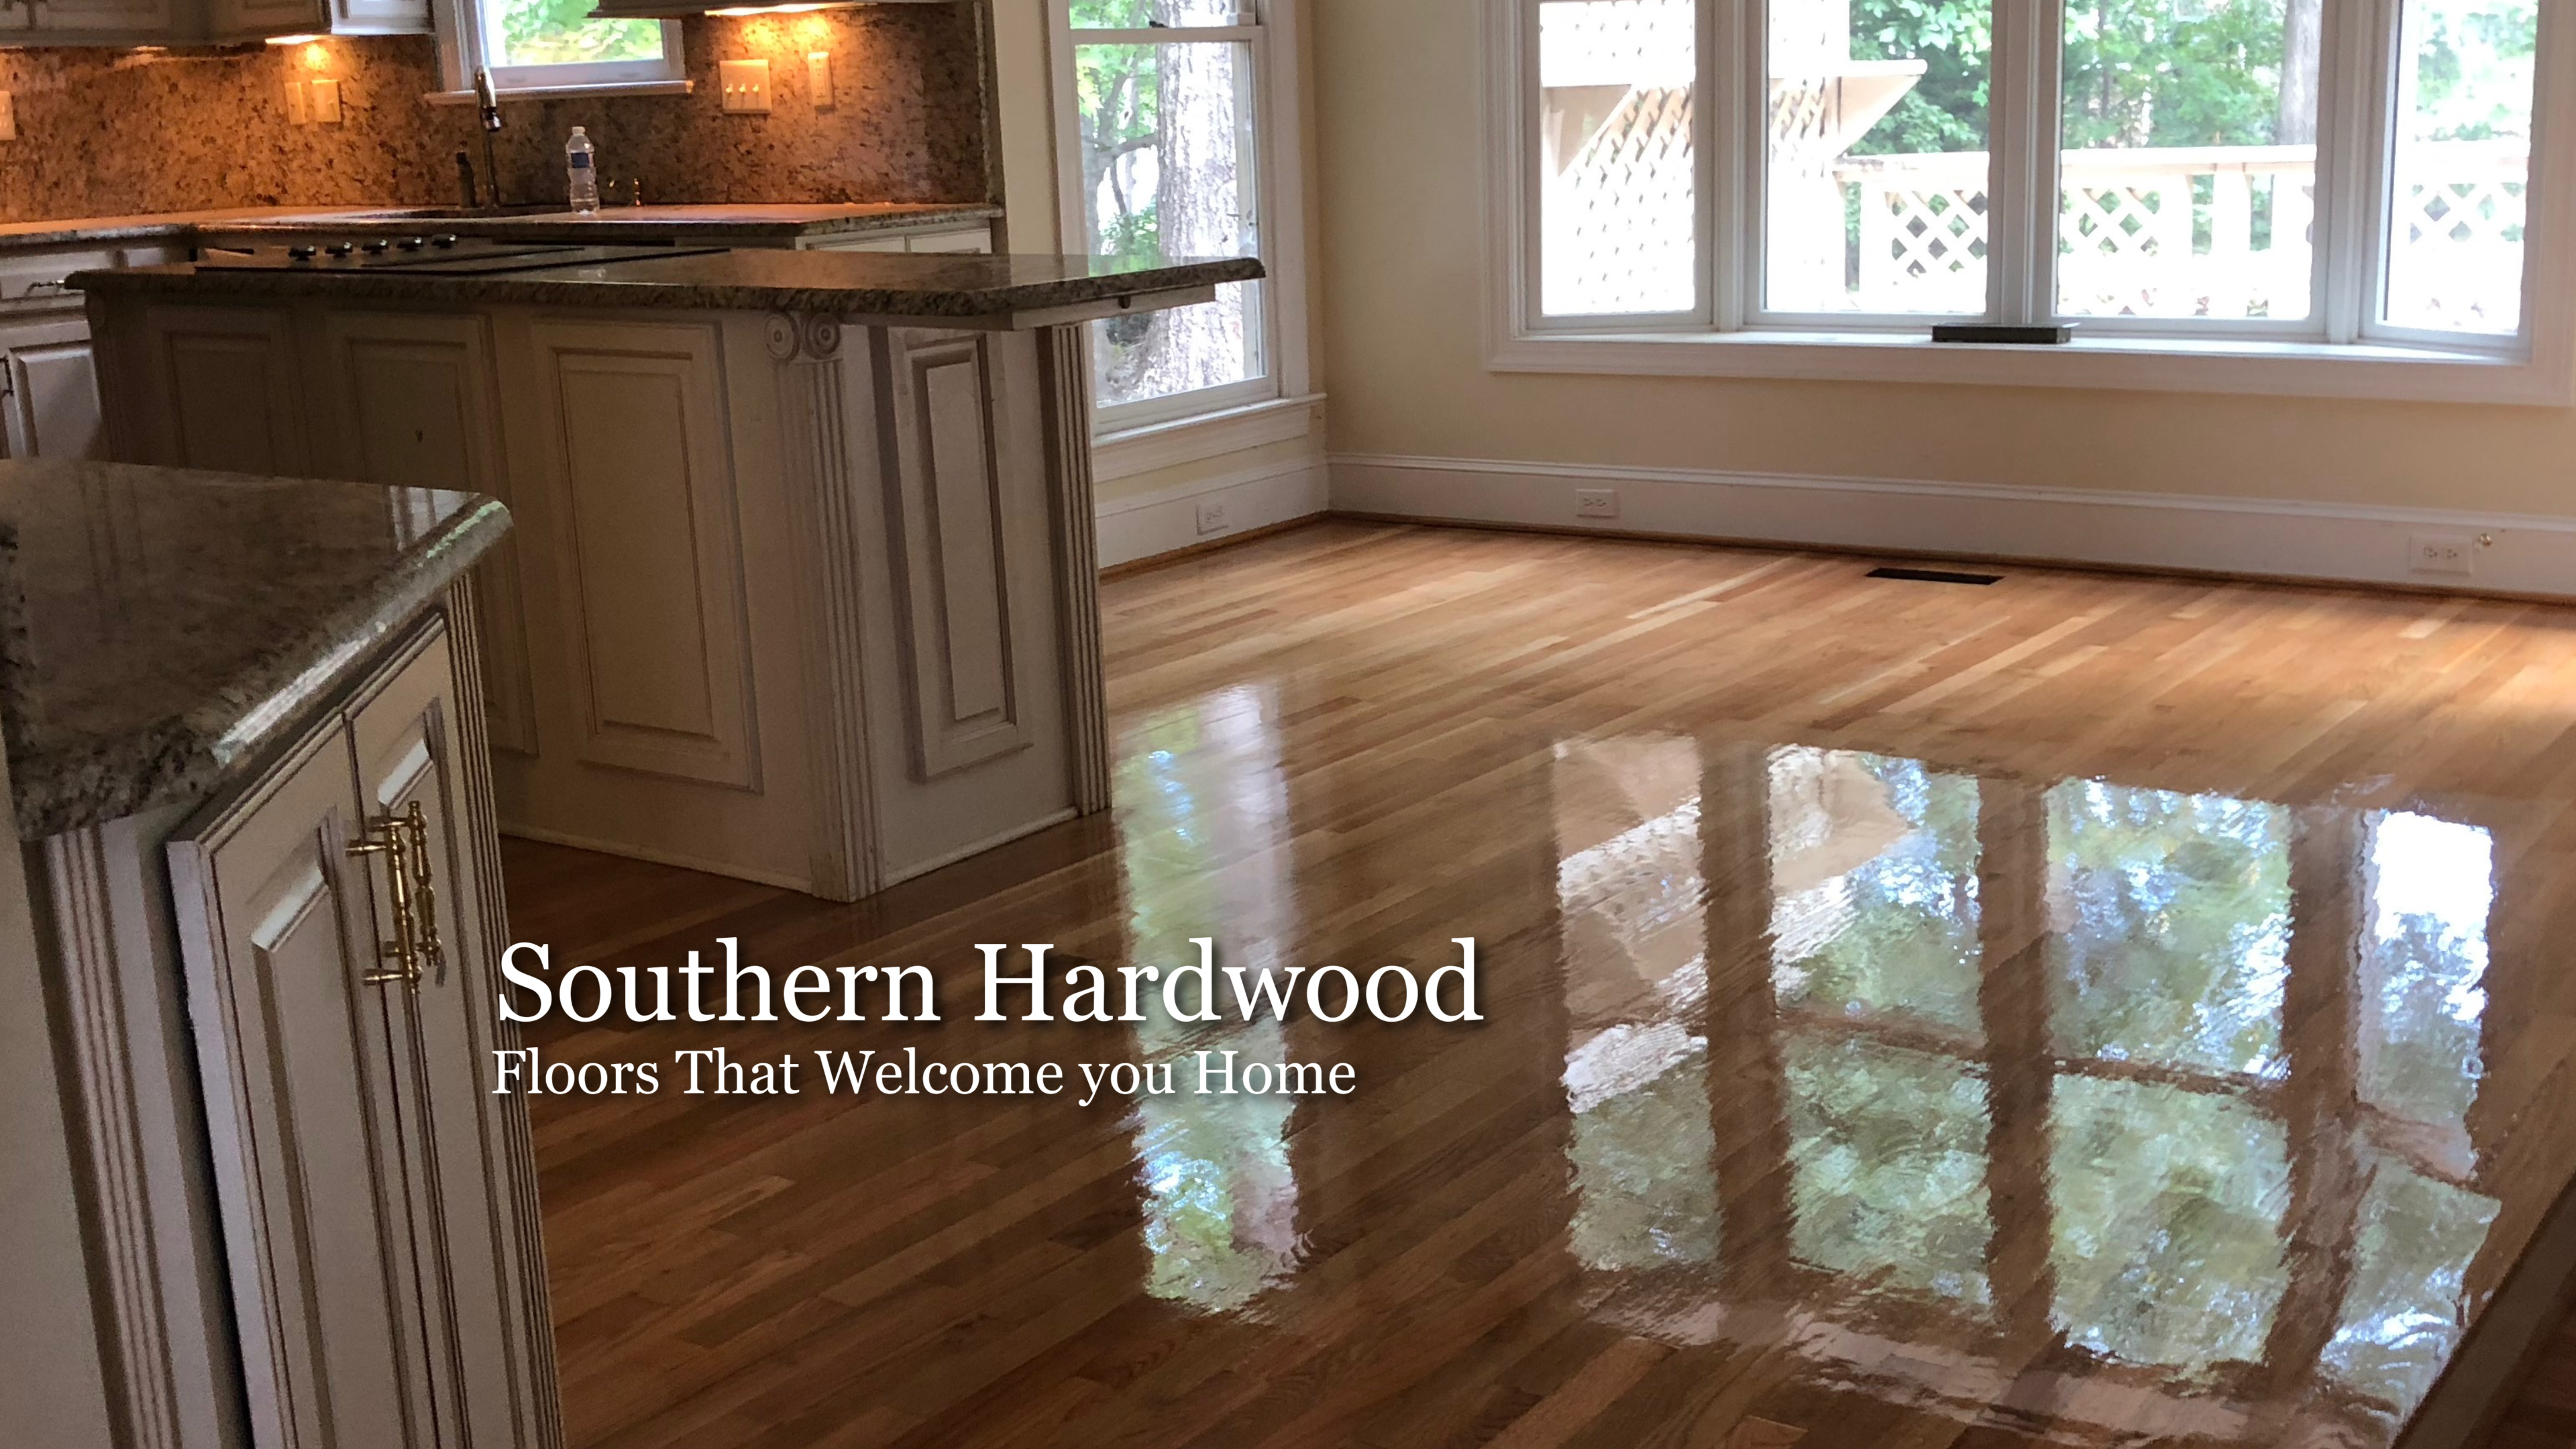 Southern Hardwood Floor Service, Southern Hardwood Flooring